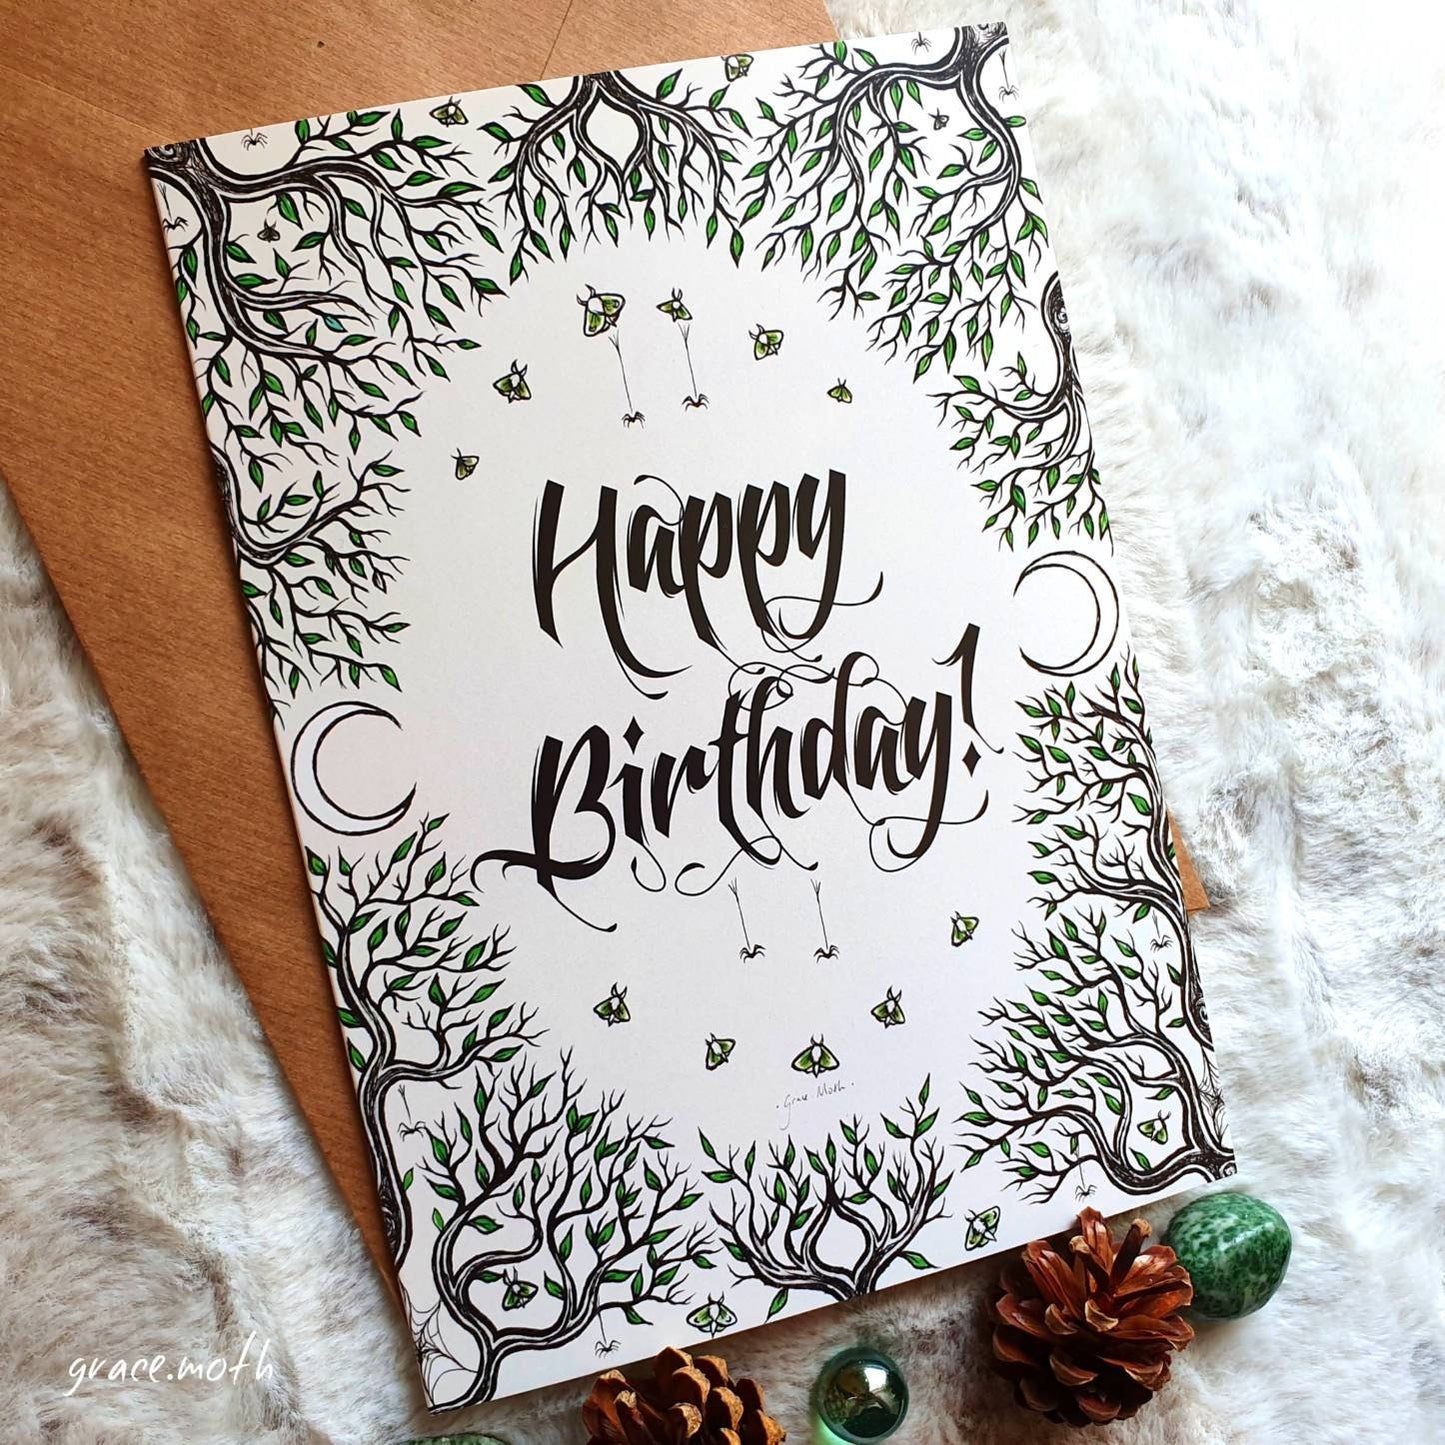 Creepy Birthday - A5 greeting card by Grace Moth - 5.8 x 8.3 gothic